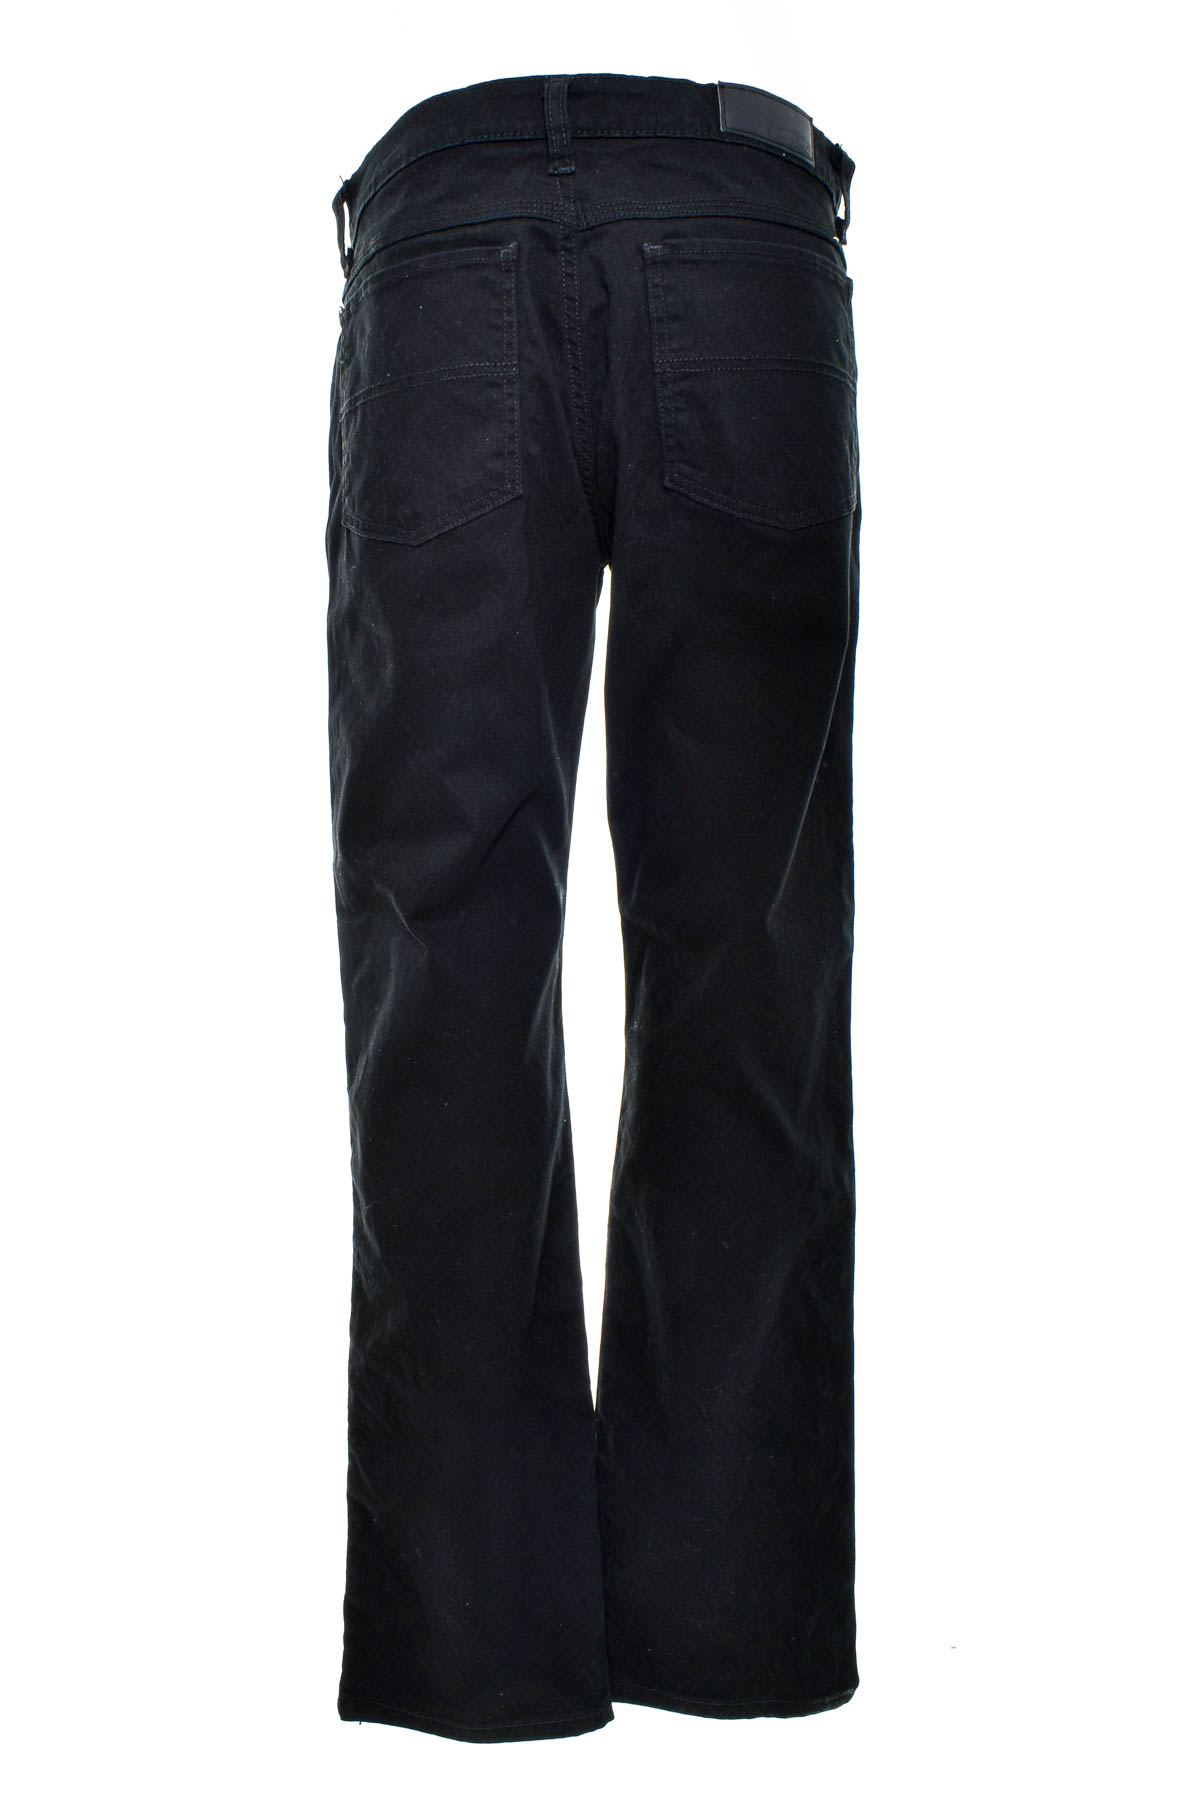 Pantalon pentru bărbați - RIDERS - 1